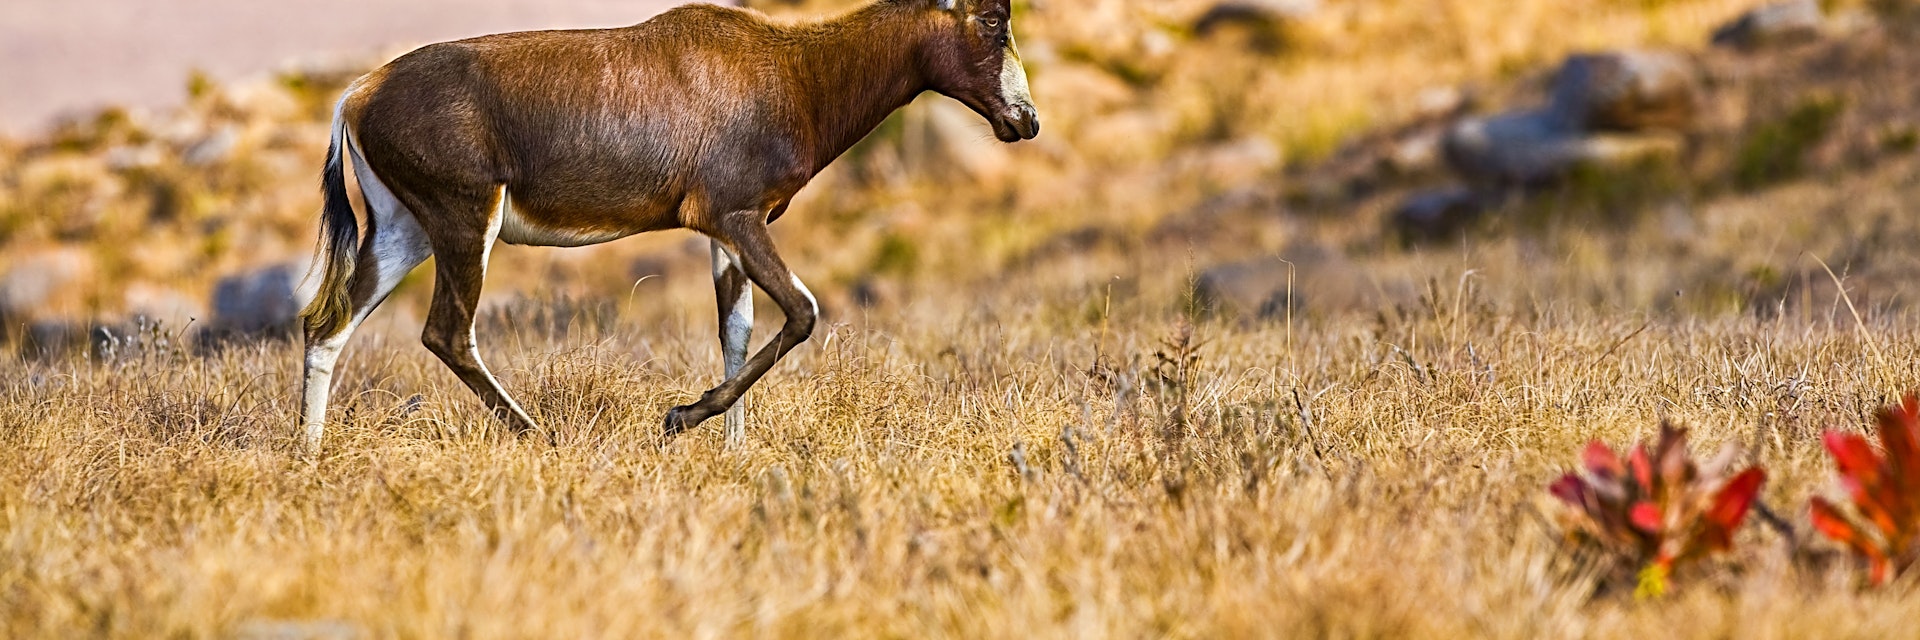 African Blesbok antelope in Swaziland